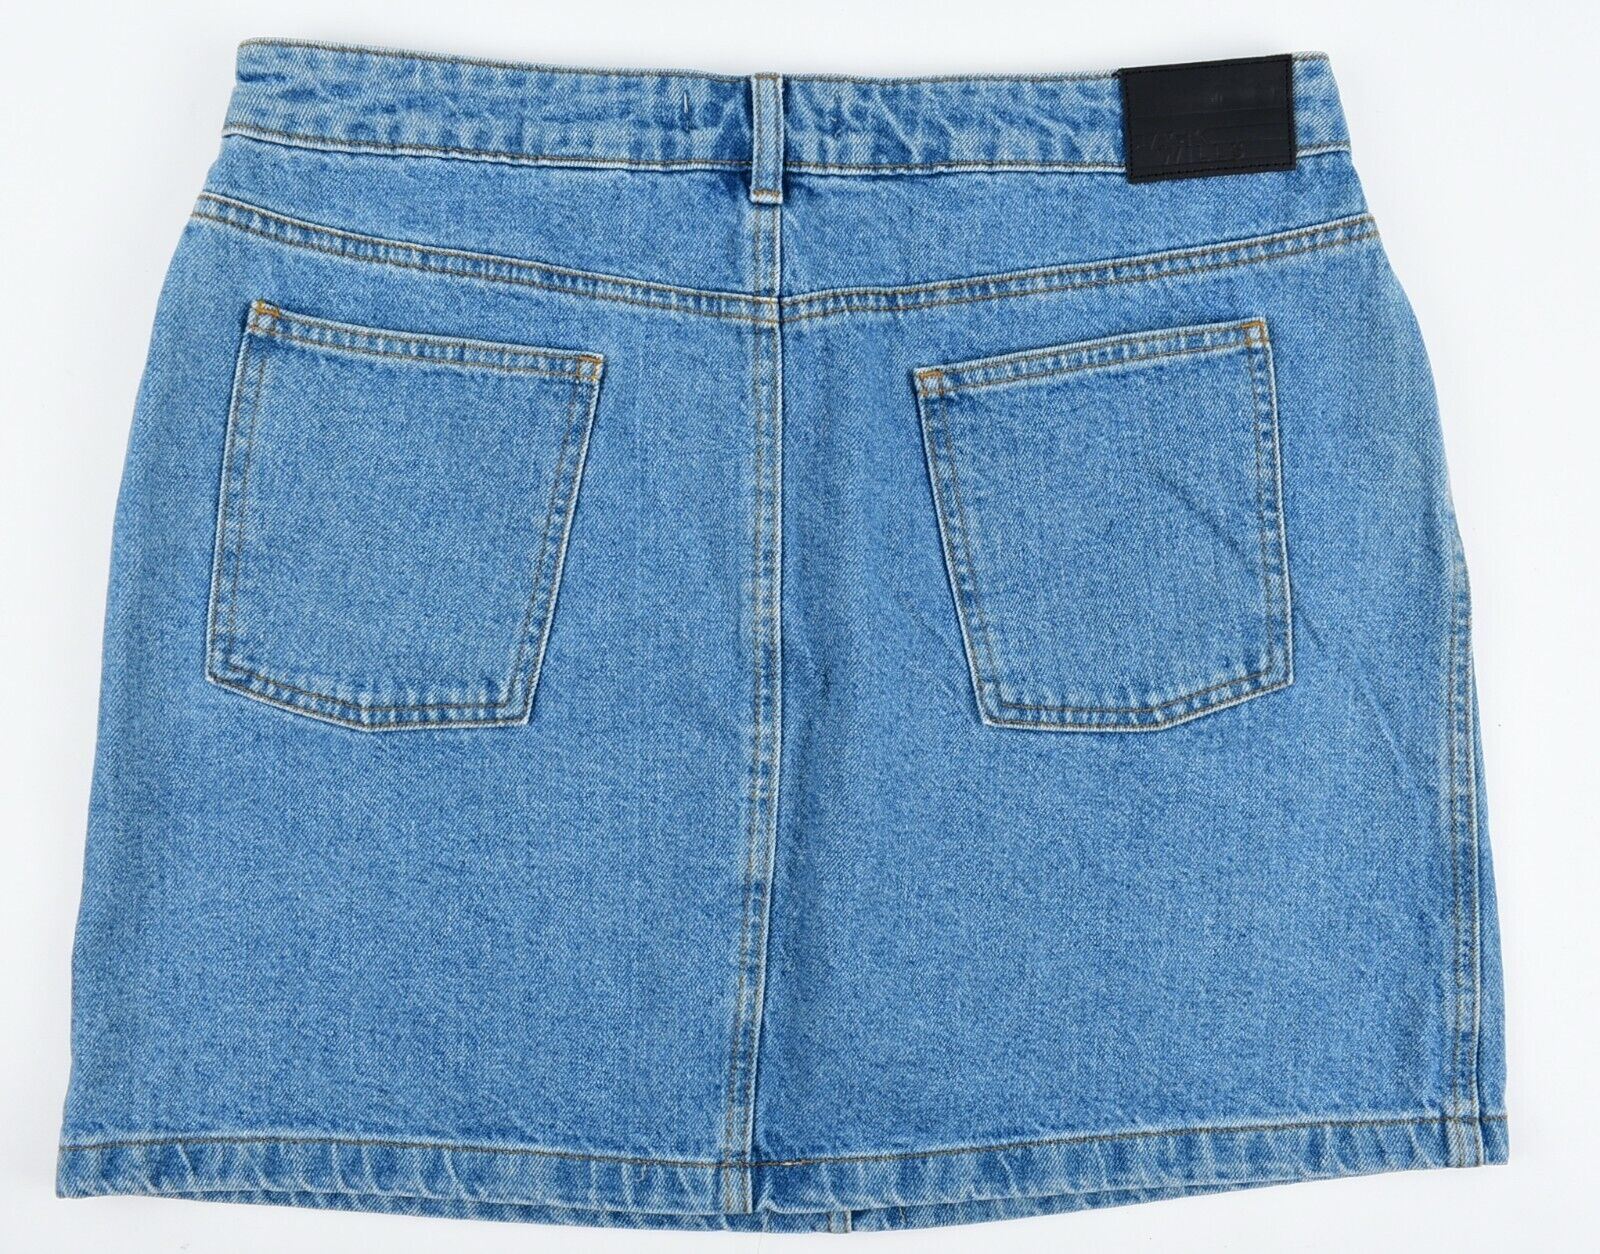 JACK WILLS Women's ROXY Denim Mini Skirt, Blue, size UK 16